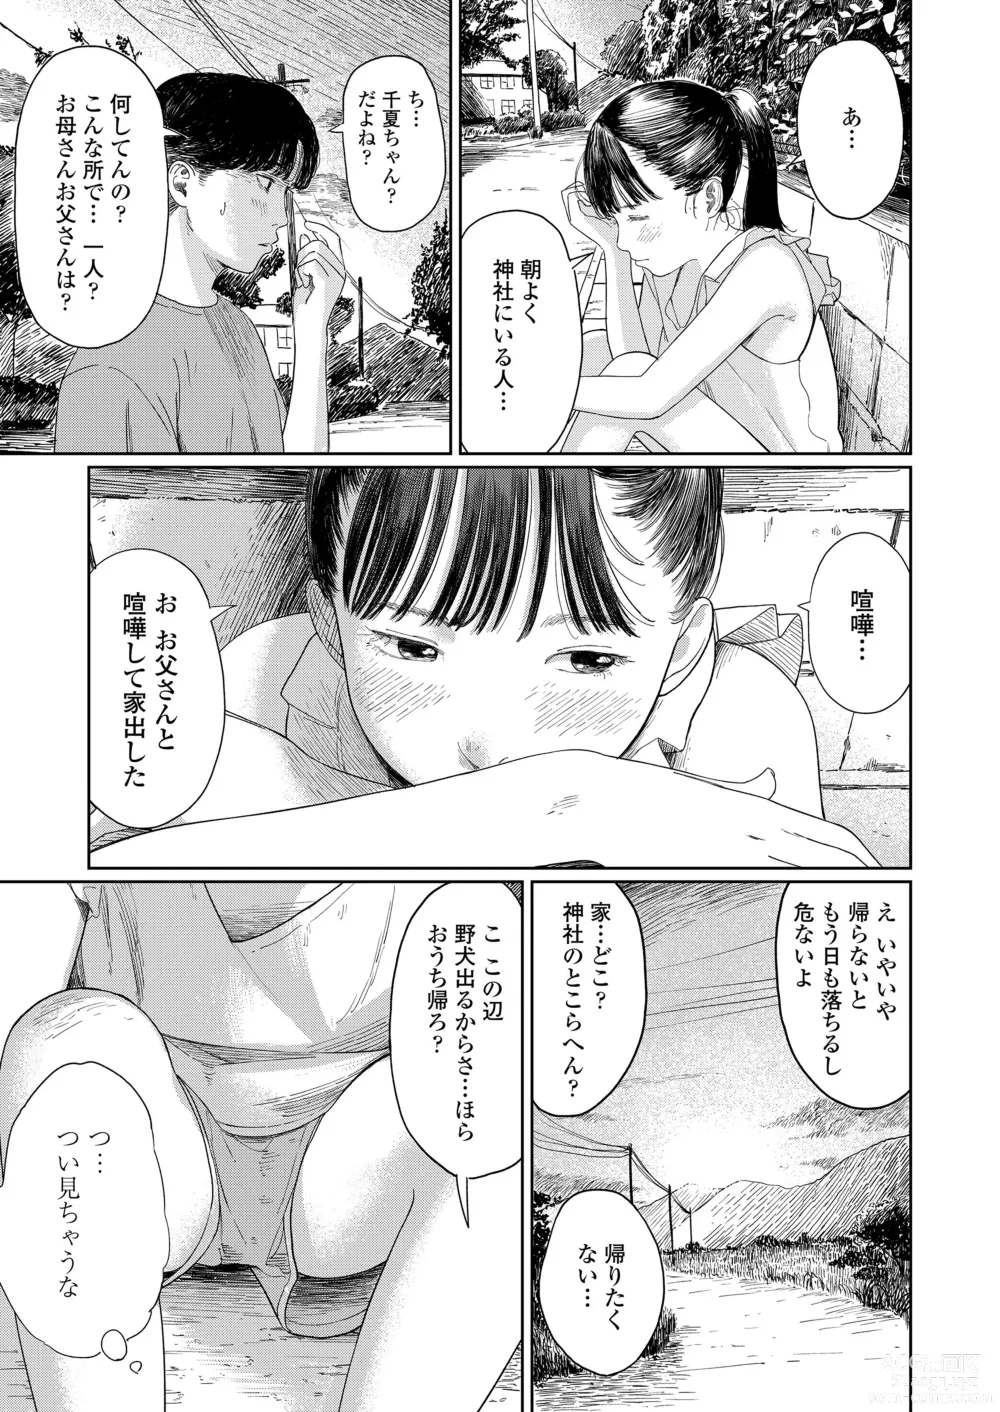 Page 5 of manga COMIC LOE VOL.4 NEXT